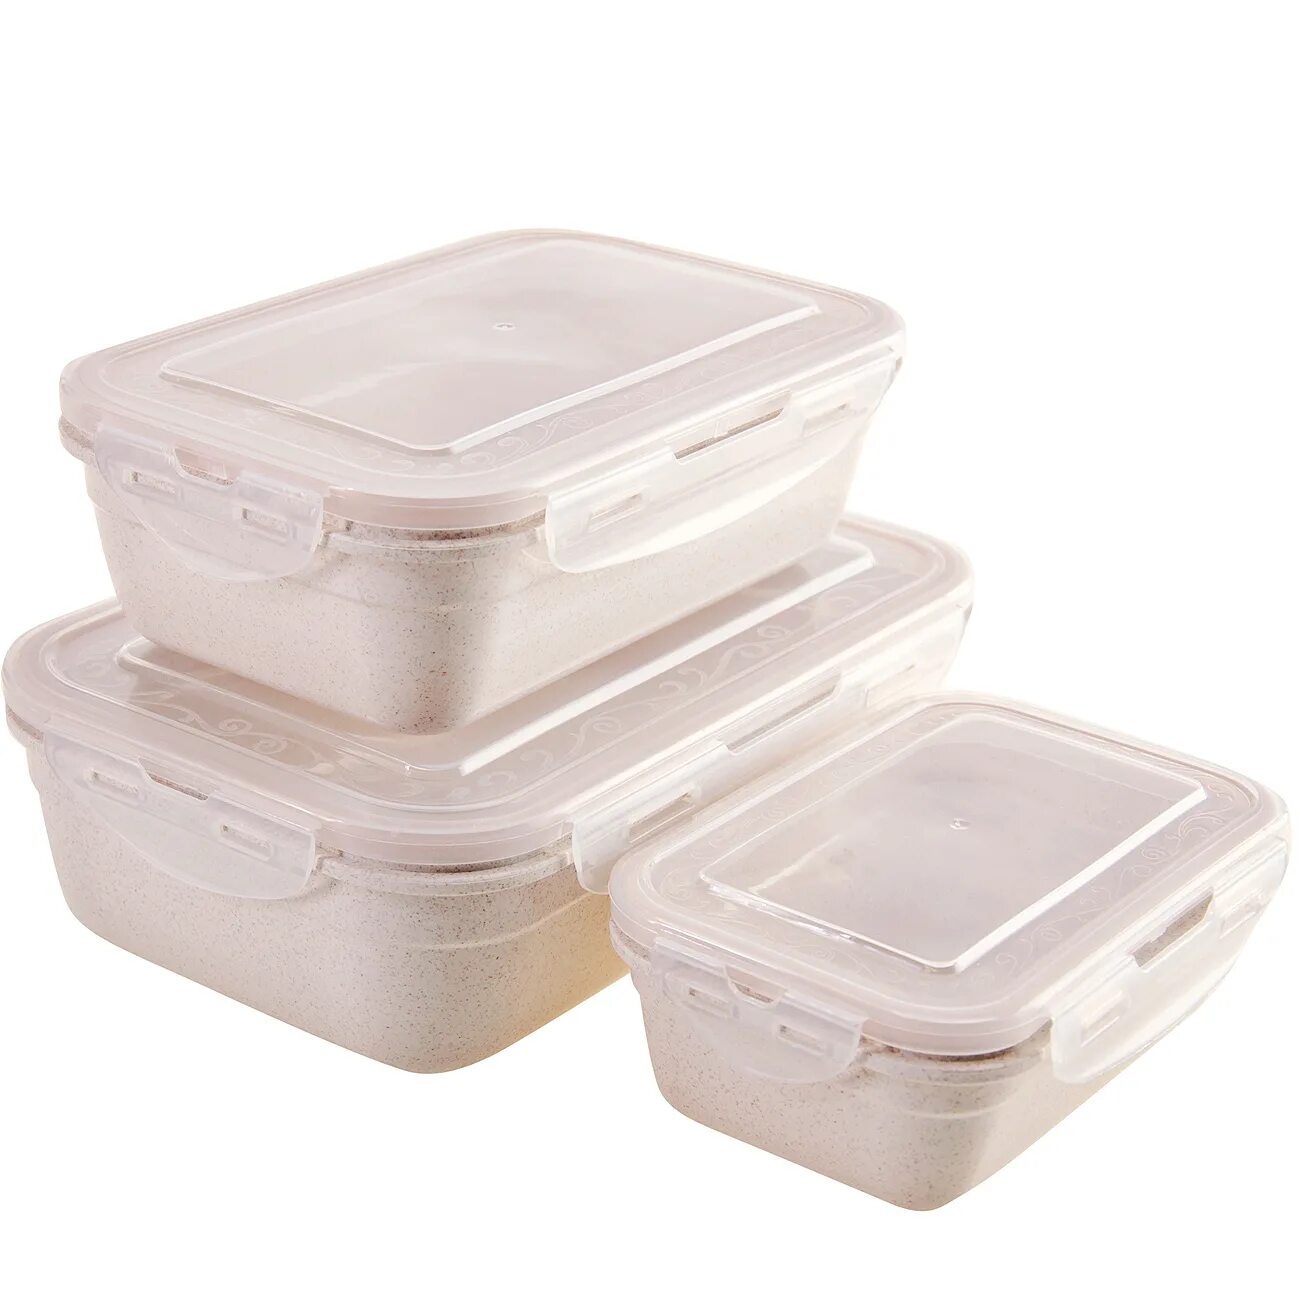 Vetta набор контейнеров пищевых Smart Box,60мл, 6шт, пластик. 29548 Набор из 3-х контейнеров пластик MB (х48). Yamada набор контейнеров million Pack 1553. Контейнер Mayer & Boch 29697.